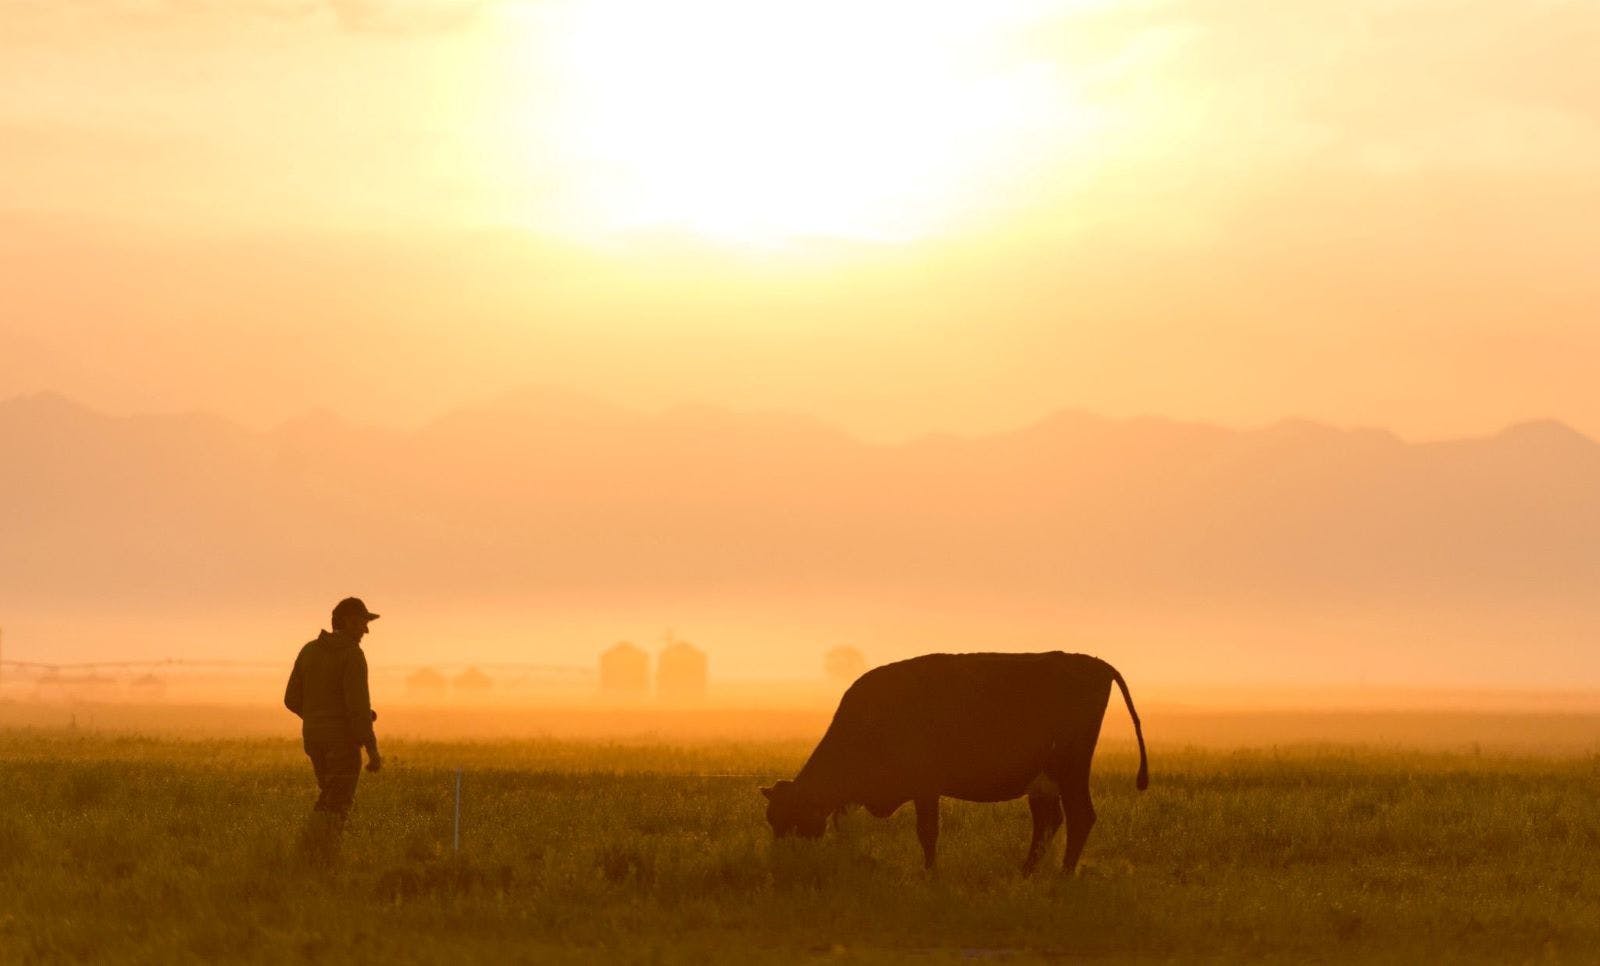 Cows and a farmer as the sun sets.